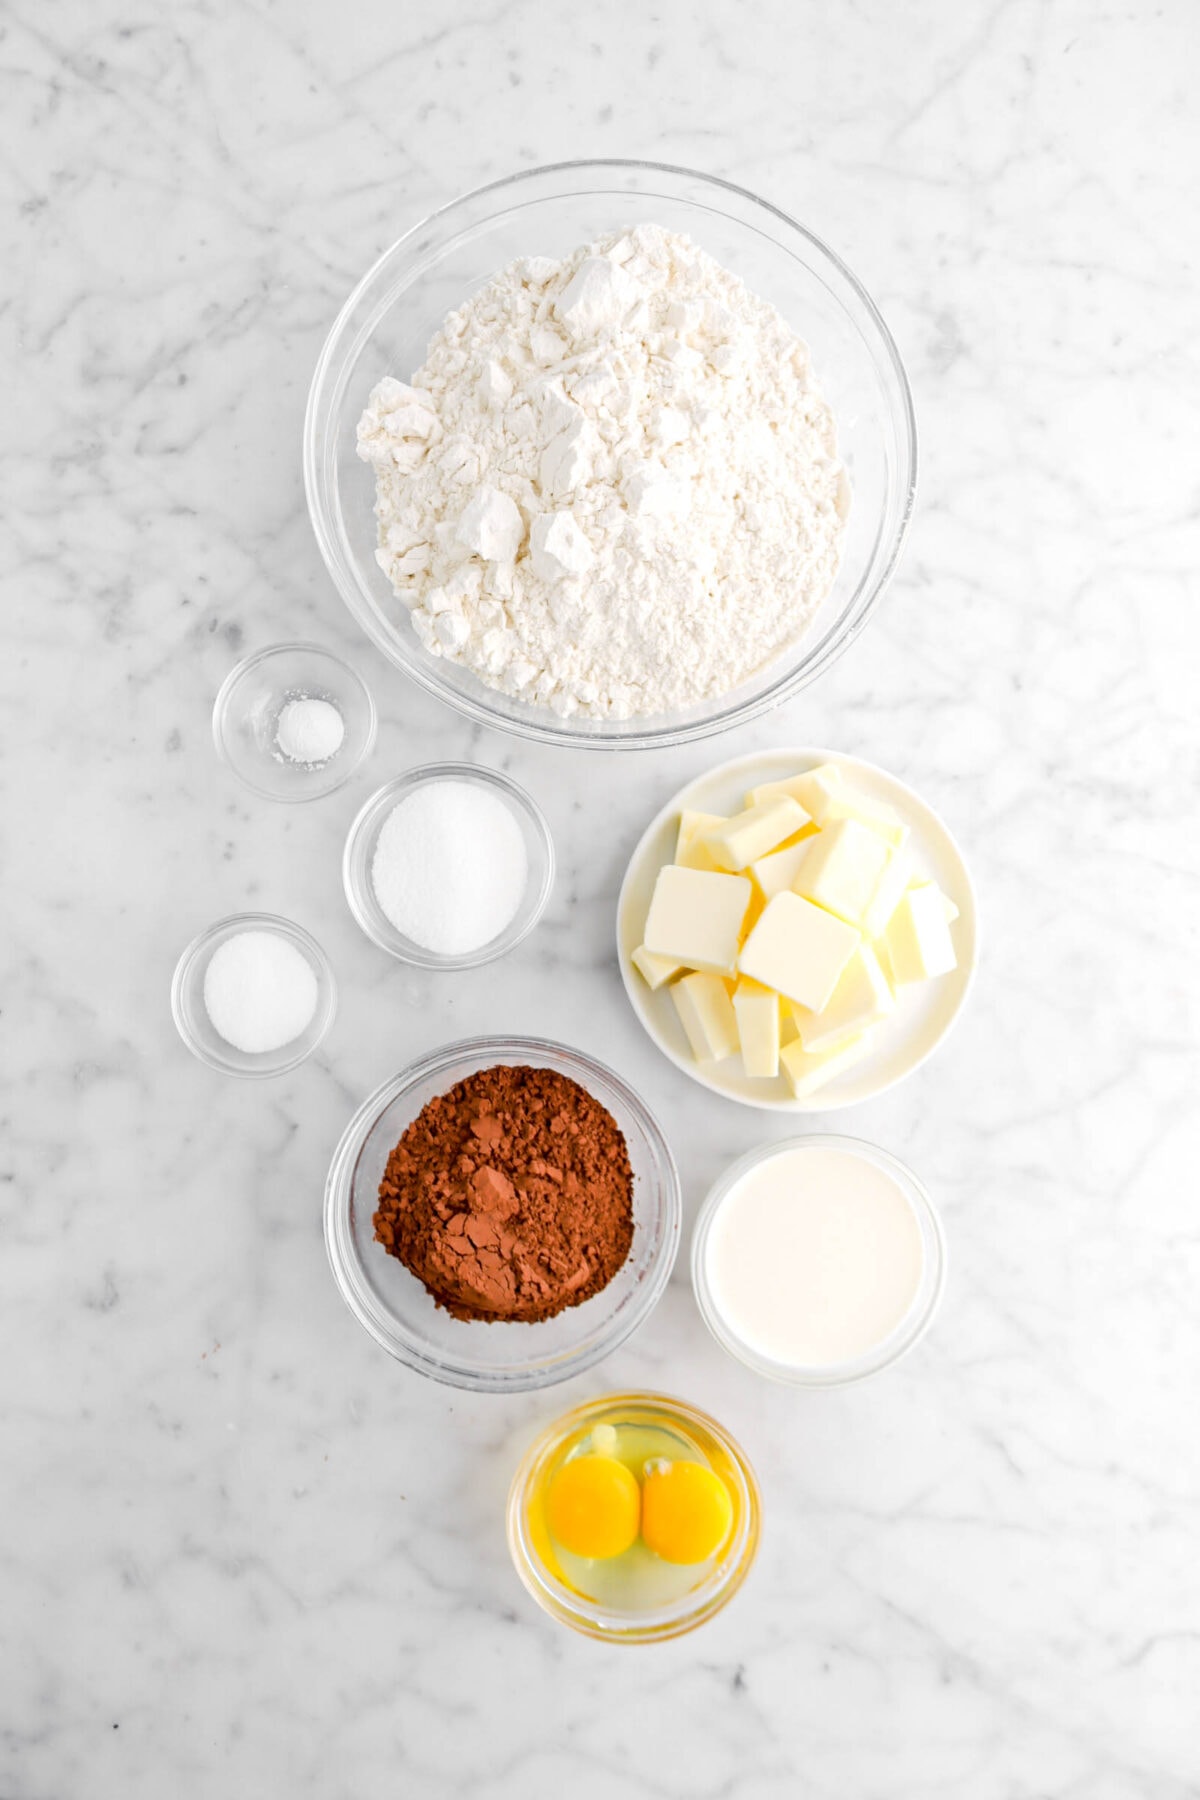 flour, baking powder, sugar, salt, cocoa powder, eggs, milk, and chopped butter on marble surface